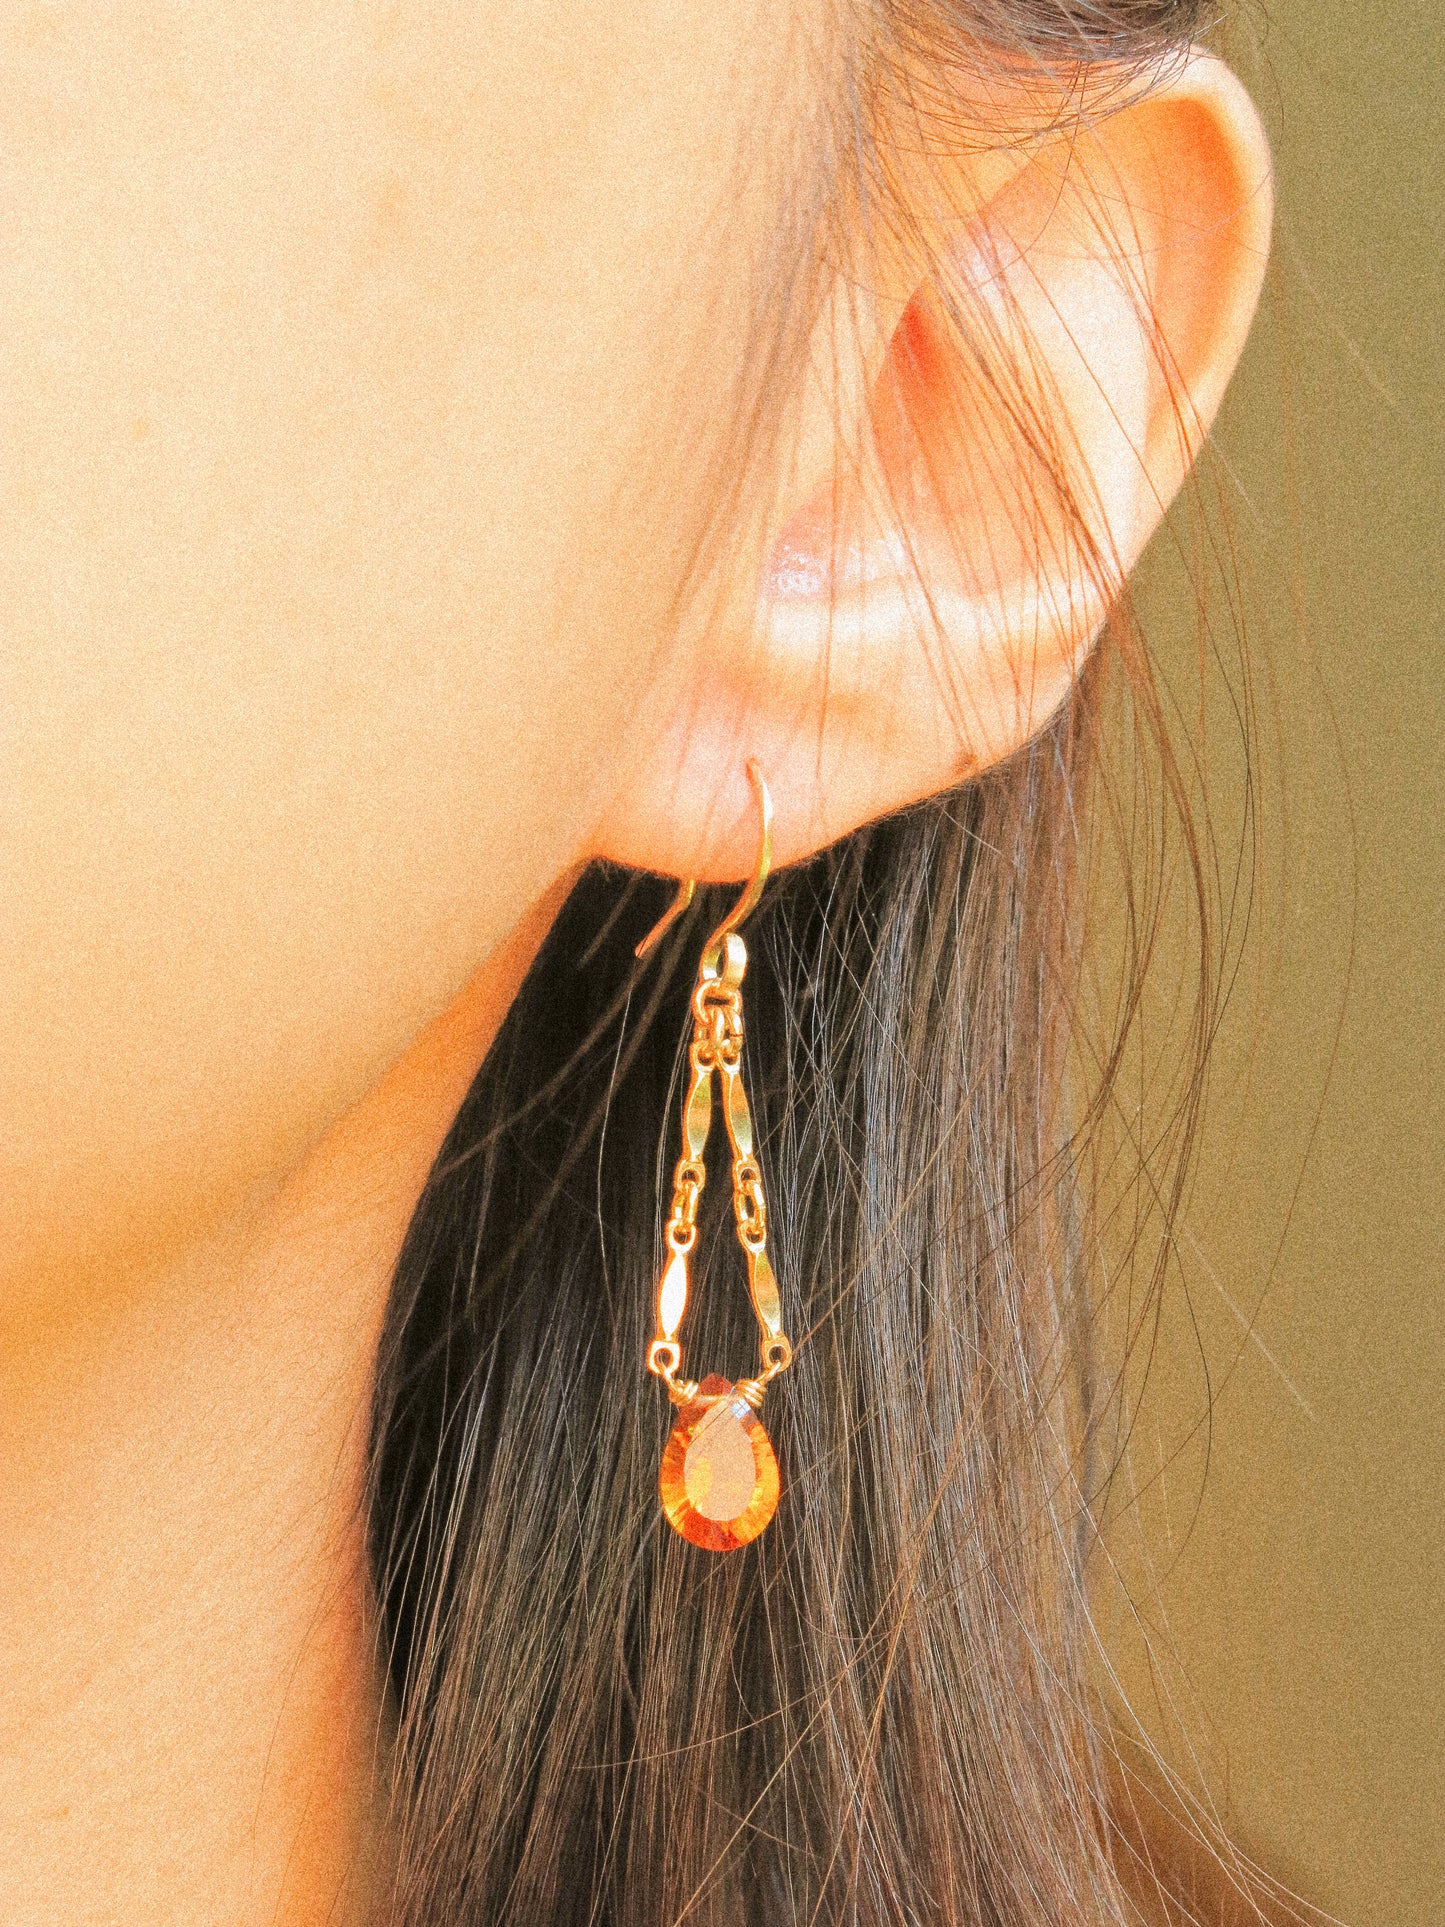 Catcher Earrings in Concave Cut Brandy Citrine in 14K Gold Fill, November Birthstone, Handmade Jewelry